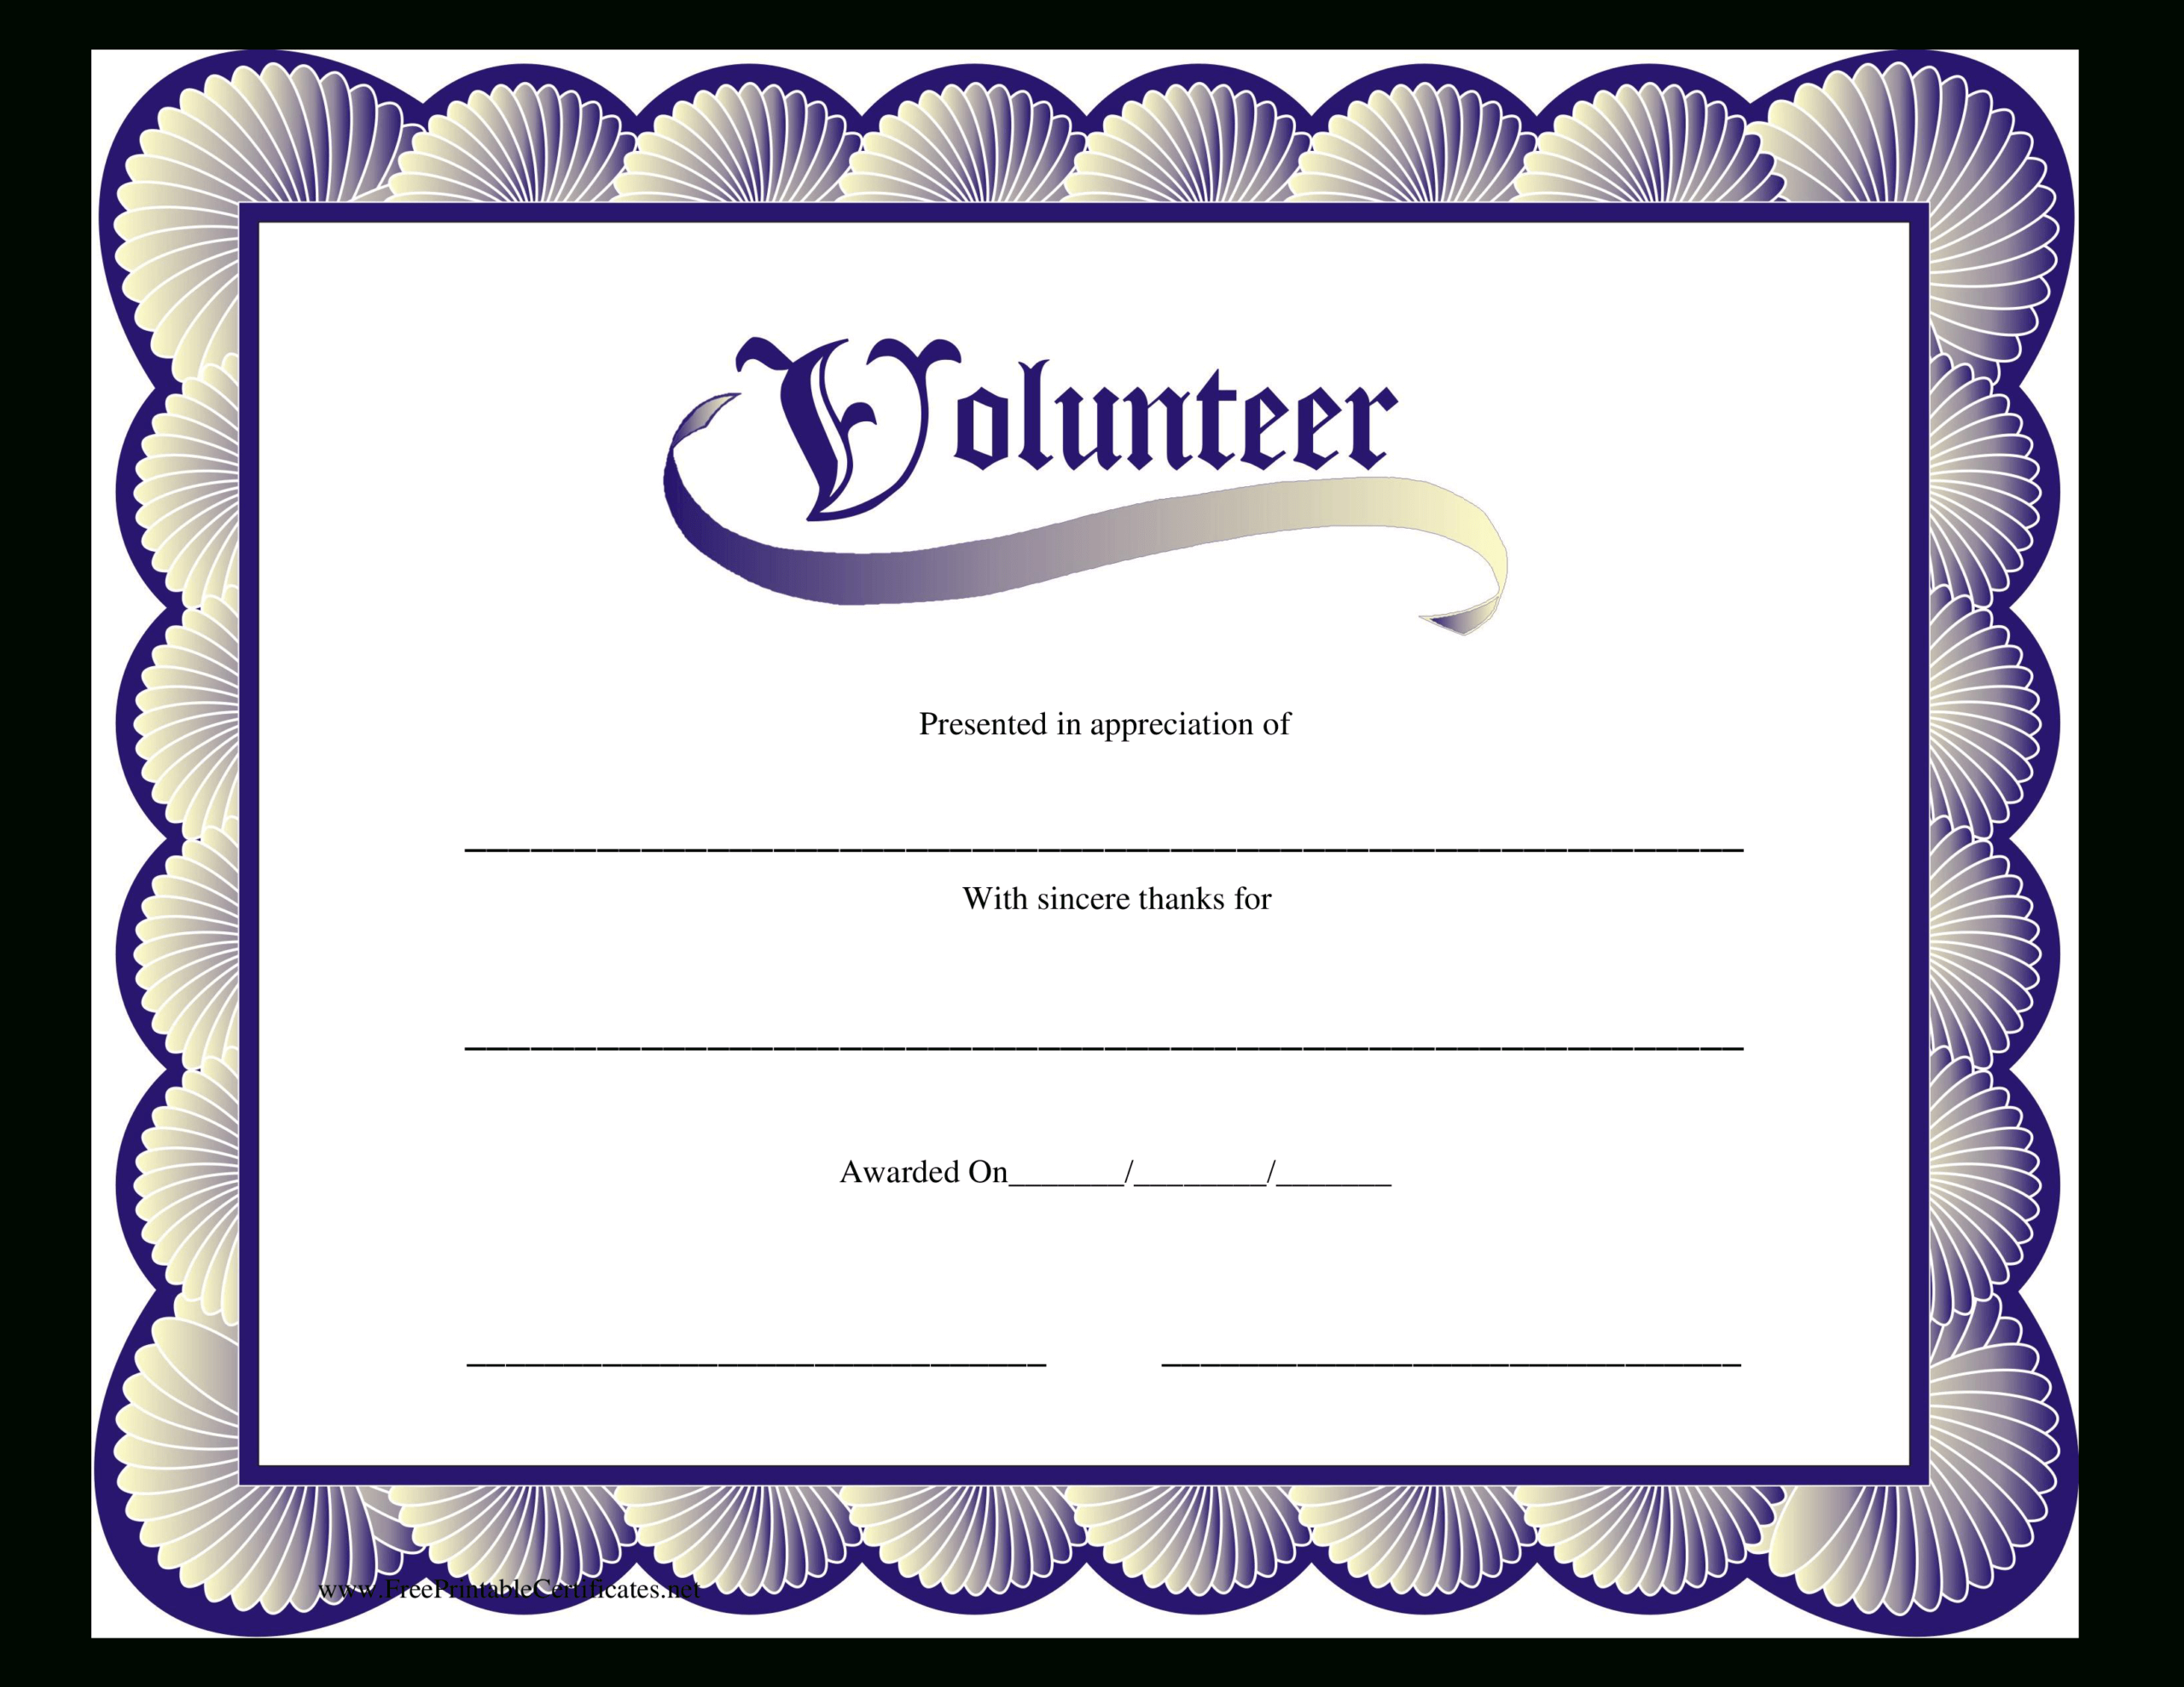 Volunteer Certificate | Templates At Allbusinesstemplates Within Volunteer Certificate Template